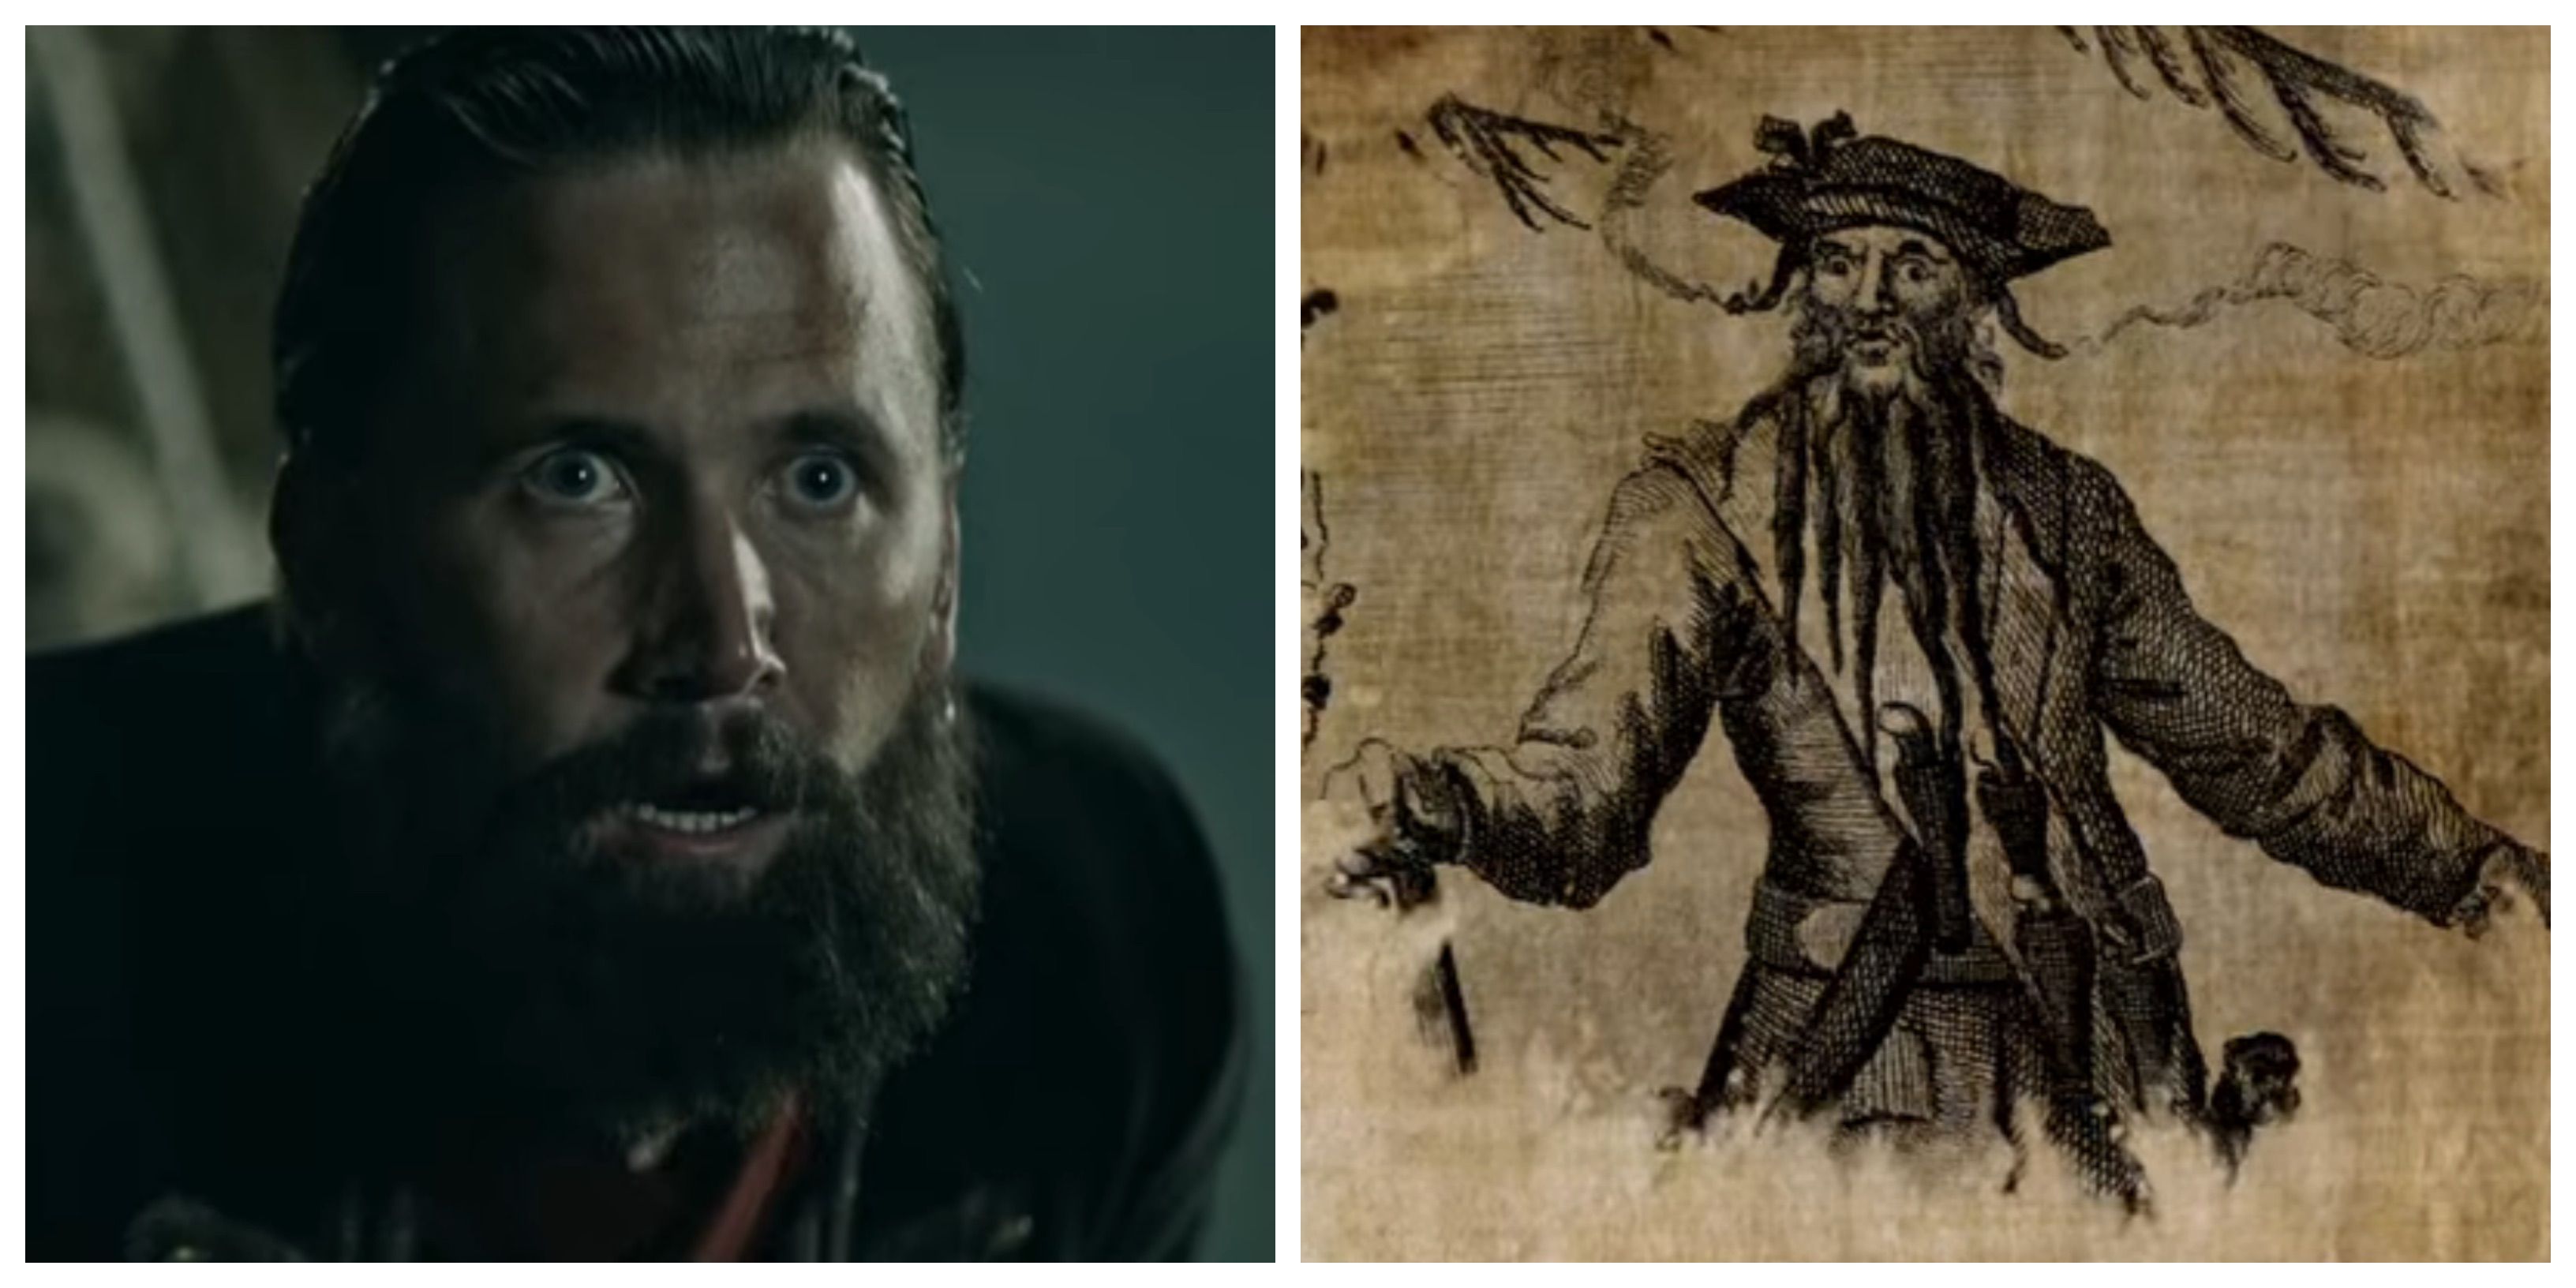 James Oliver Wheatley as Edward Thatch aka Blackbeard in The Lost Pirate Kingdom on Netflix